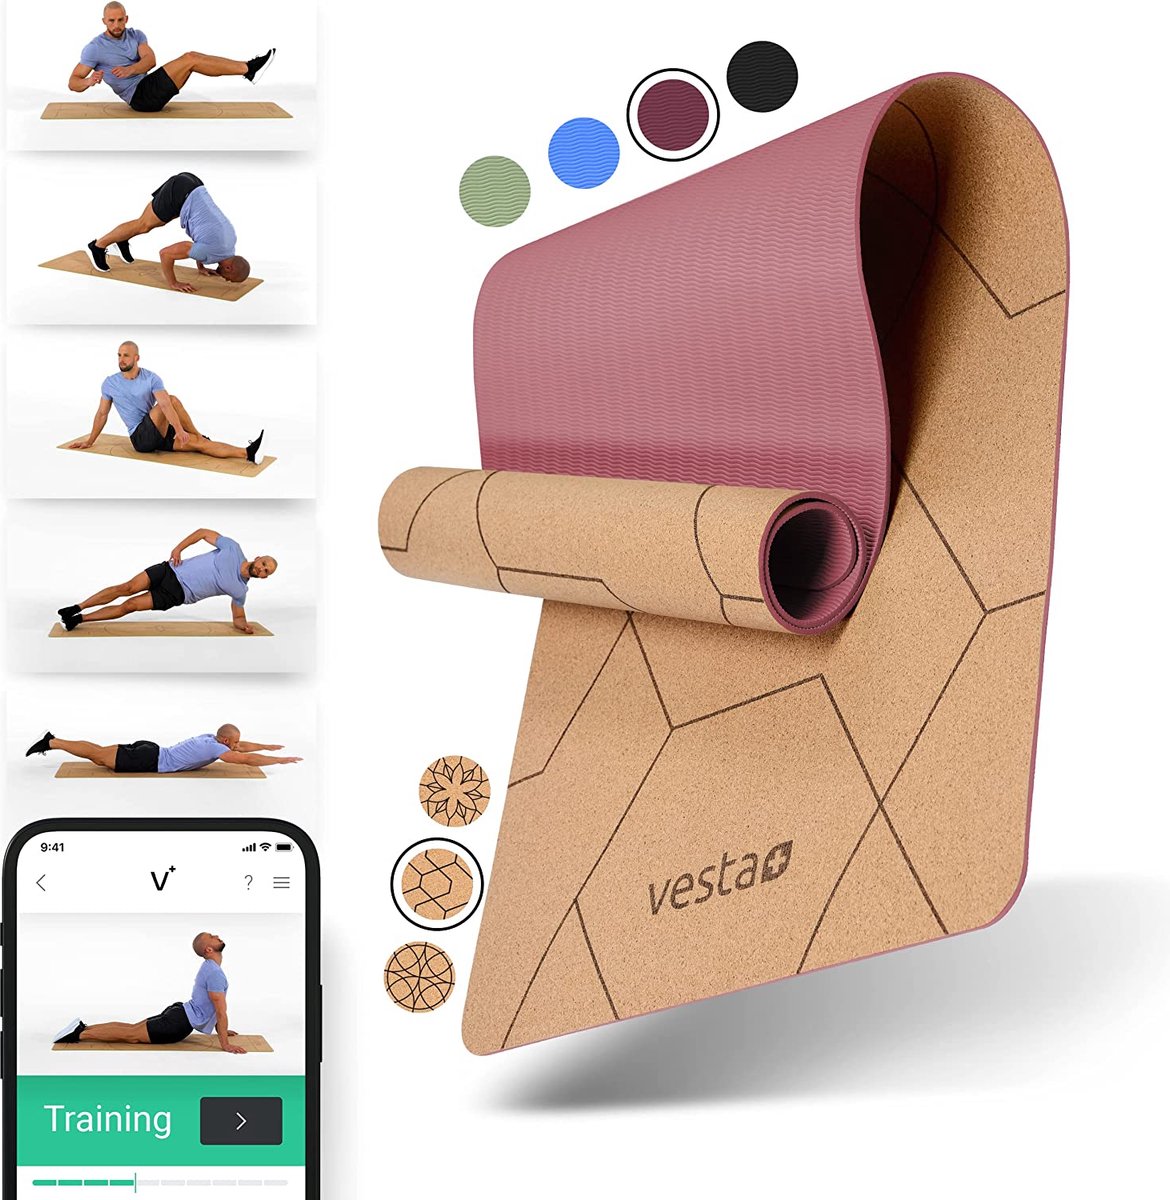 Yogamat kurk TPE + Fitness app – de duurzame kurk yogamat voor de plus in je workout – testwinnaar onder kurkmatten yoga als yogamat kurk, sportmat kurk & yogamat antislip